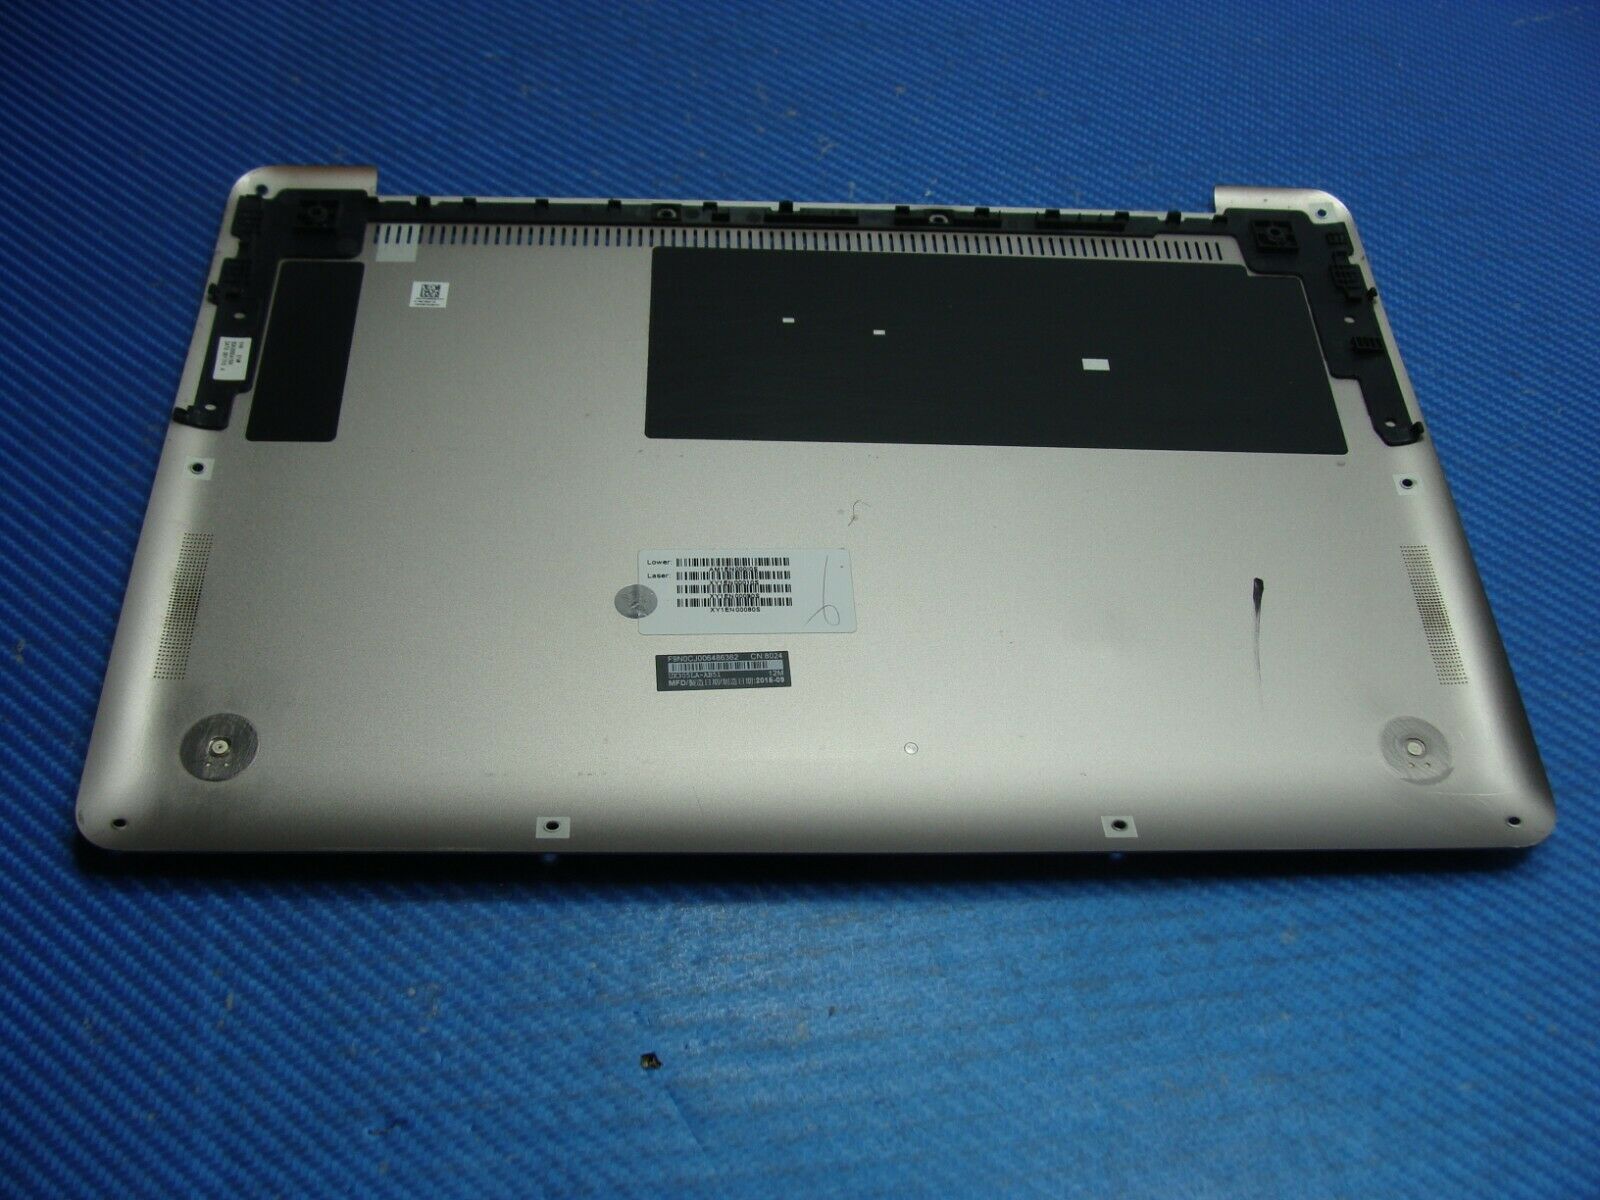 Asus ZenBook UX305LA-AB51 13.3